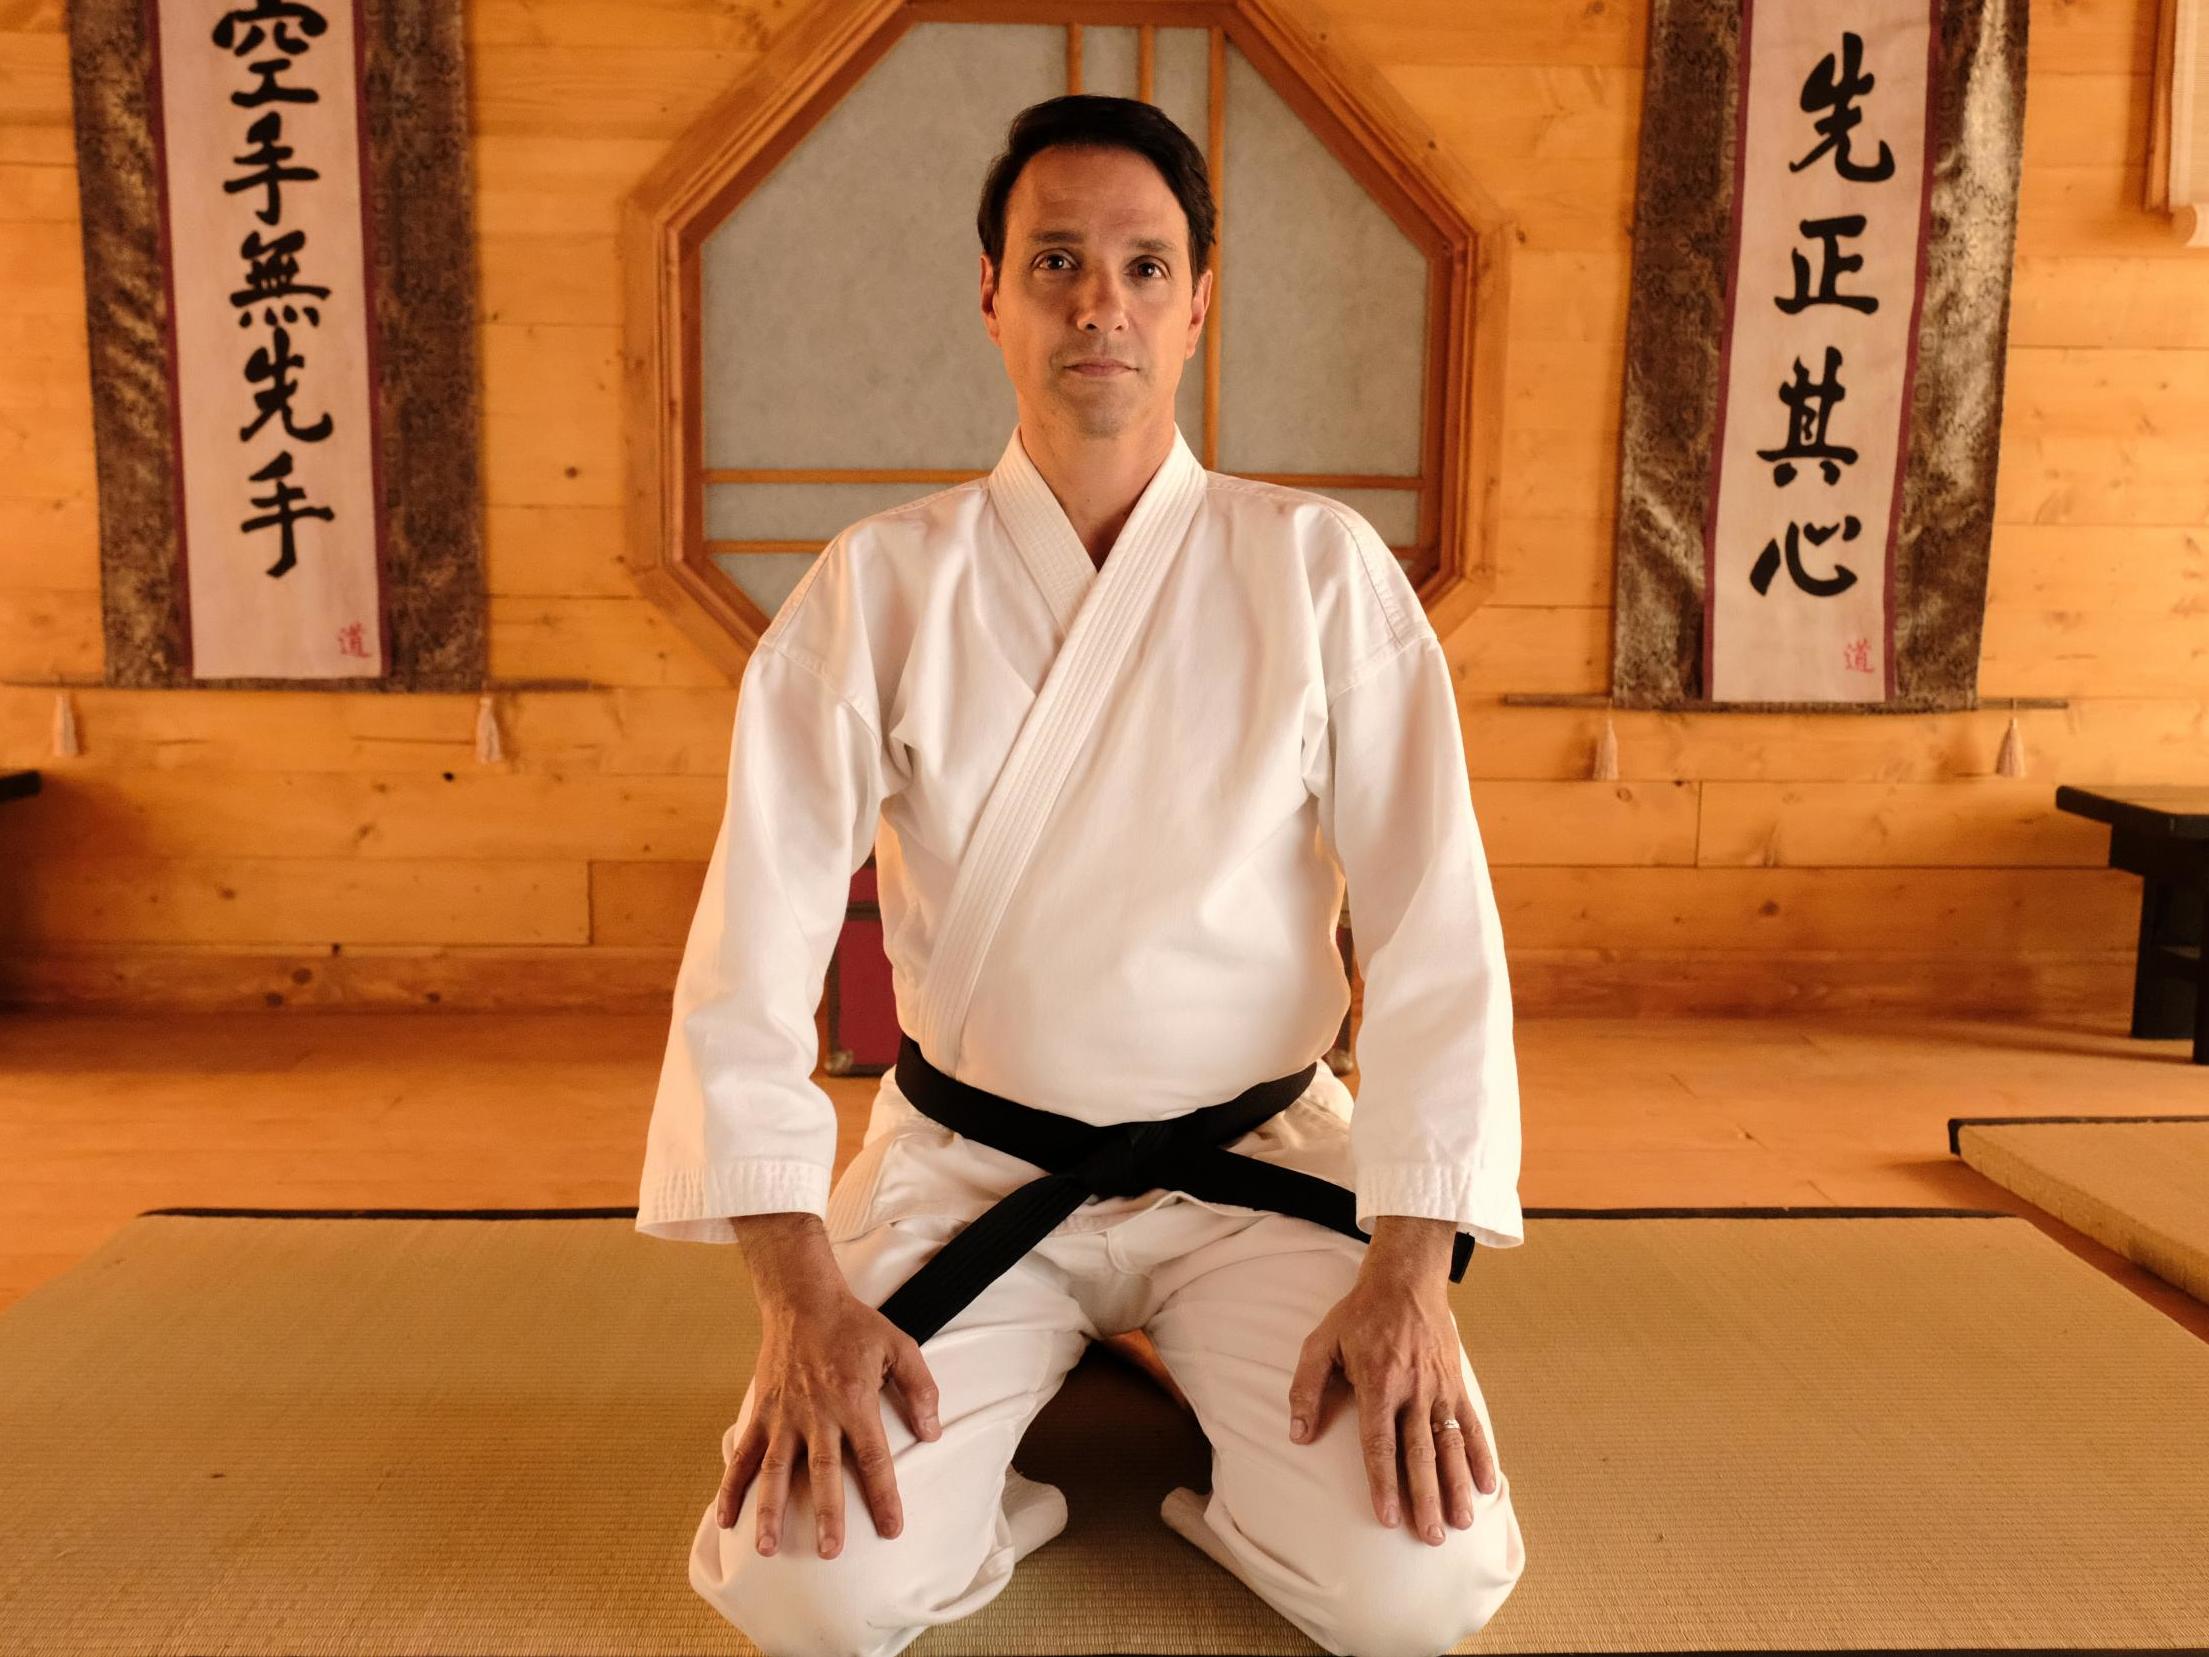 Macchio reprises the role of martial arts prodigy Daniel LaRusso in ‘Cobra Kai’ (YouTube/Sony Pictures Television)